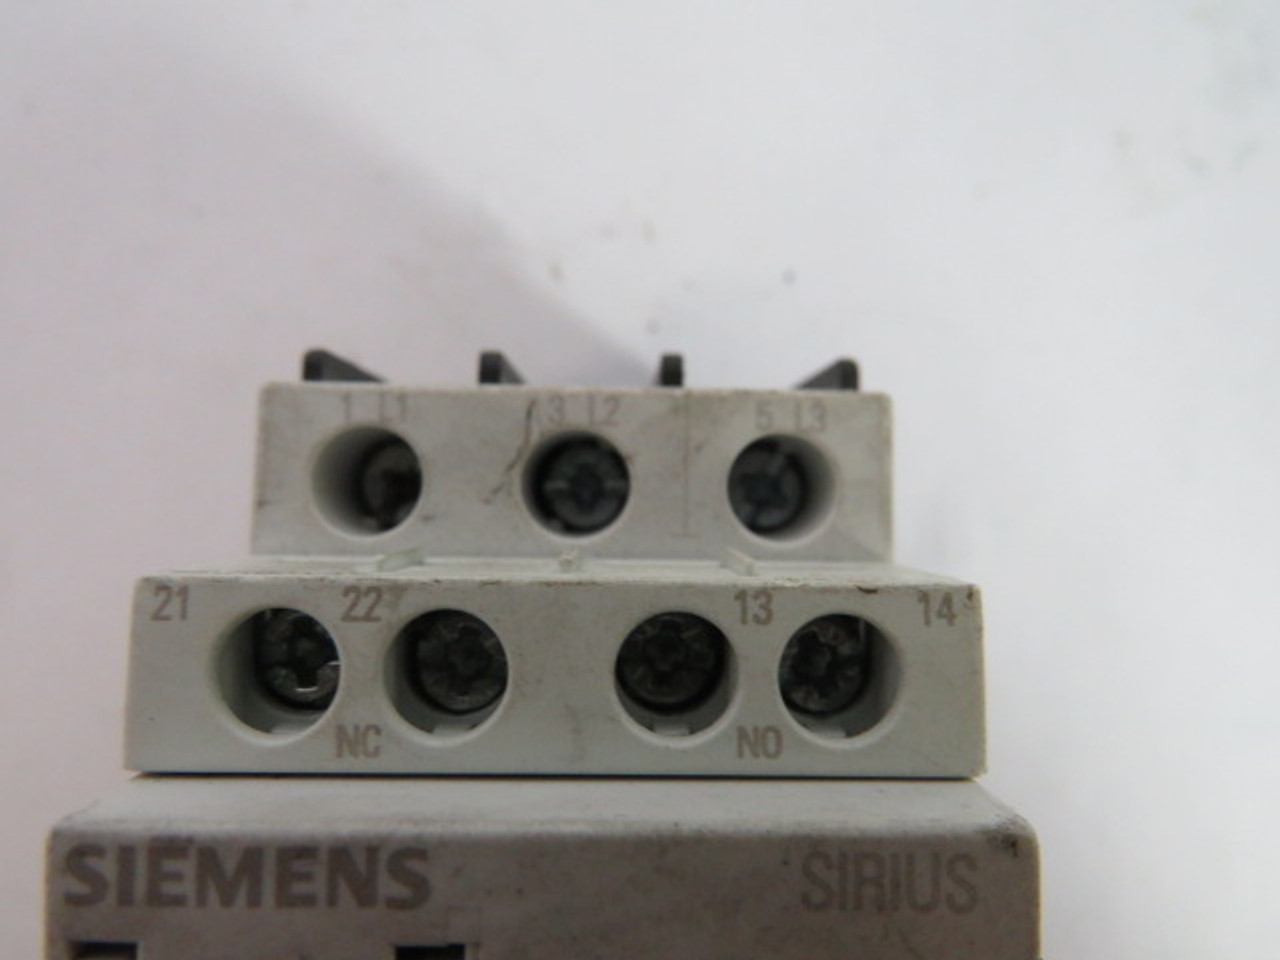 Siemens 3RV1021-1DA10 Starter Motor Protector 2.2-3.2A 3Pole Size 0 USED